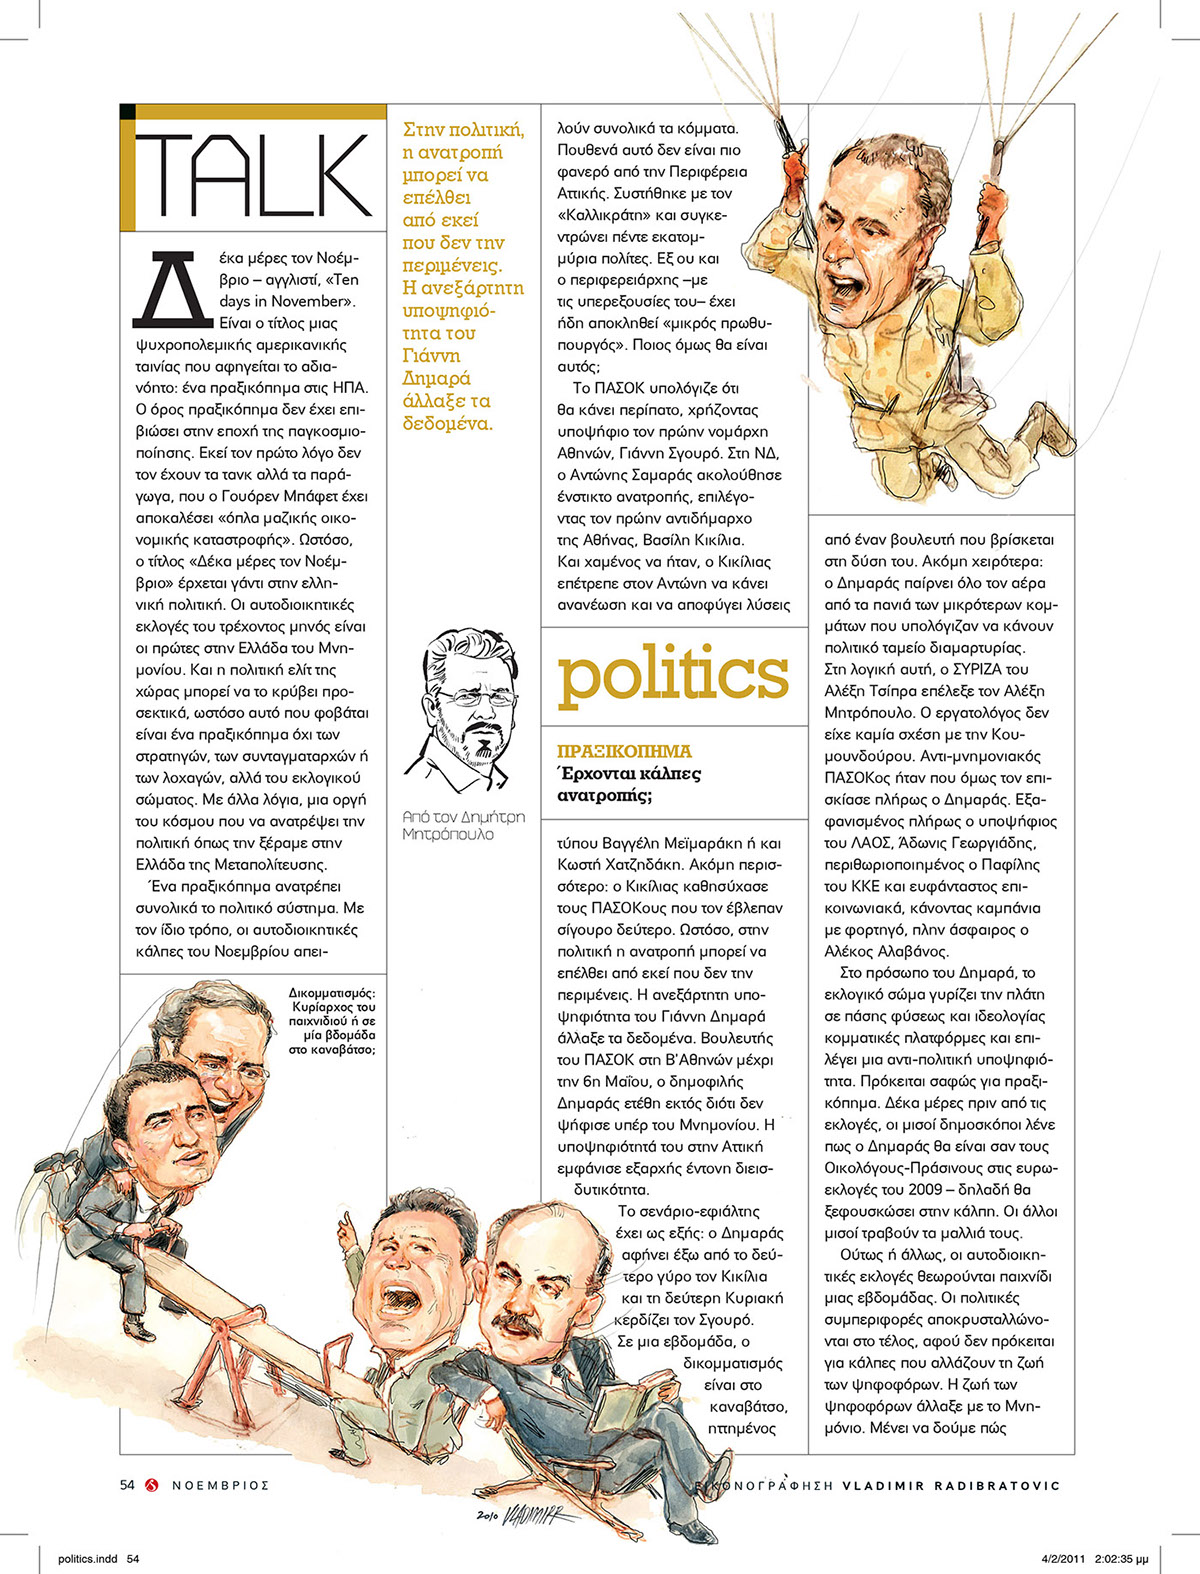 editorial magazine politics Greece watercolor politicians portraits funny caricatures